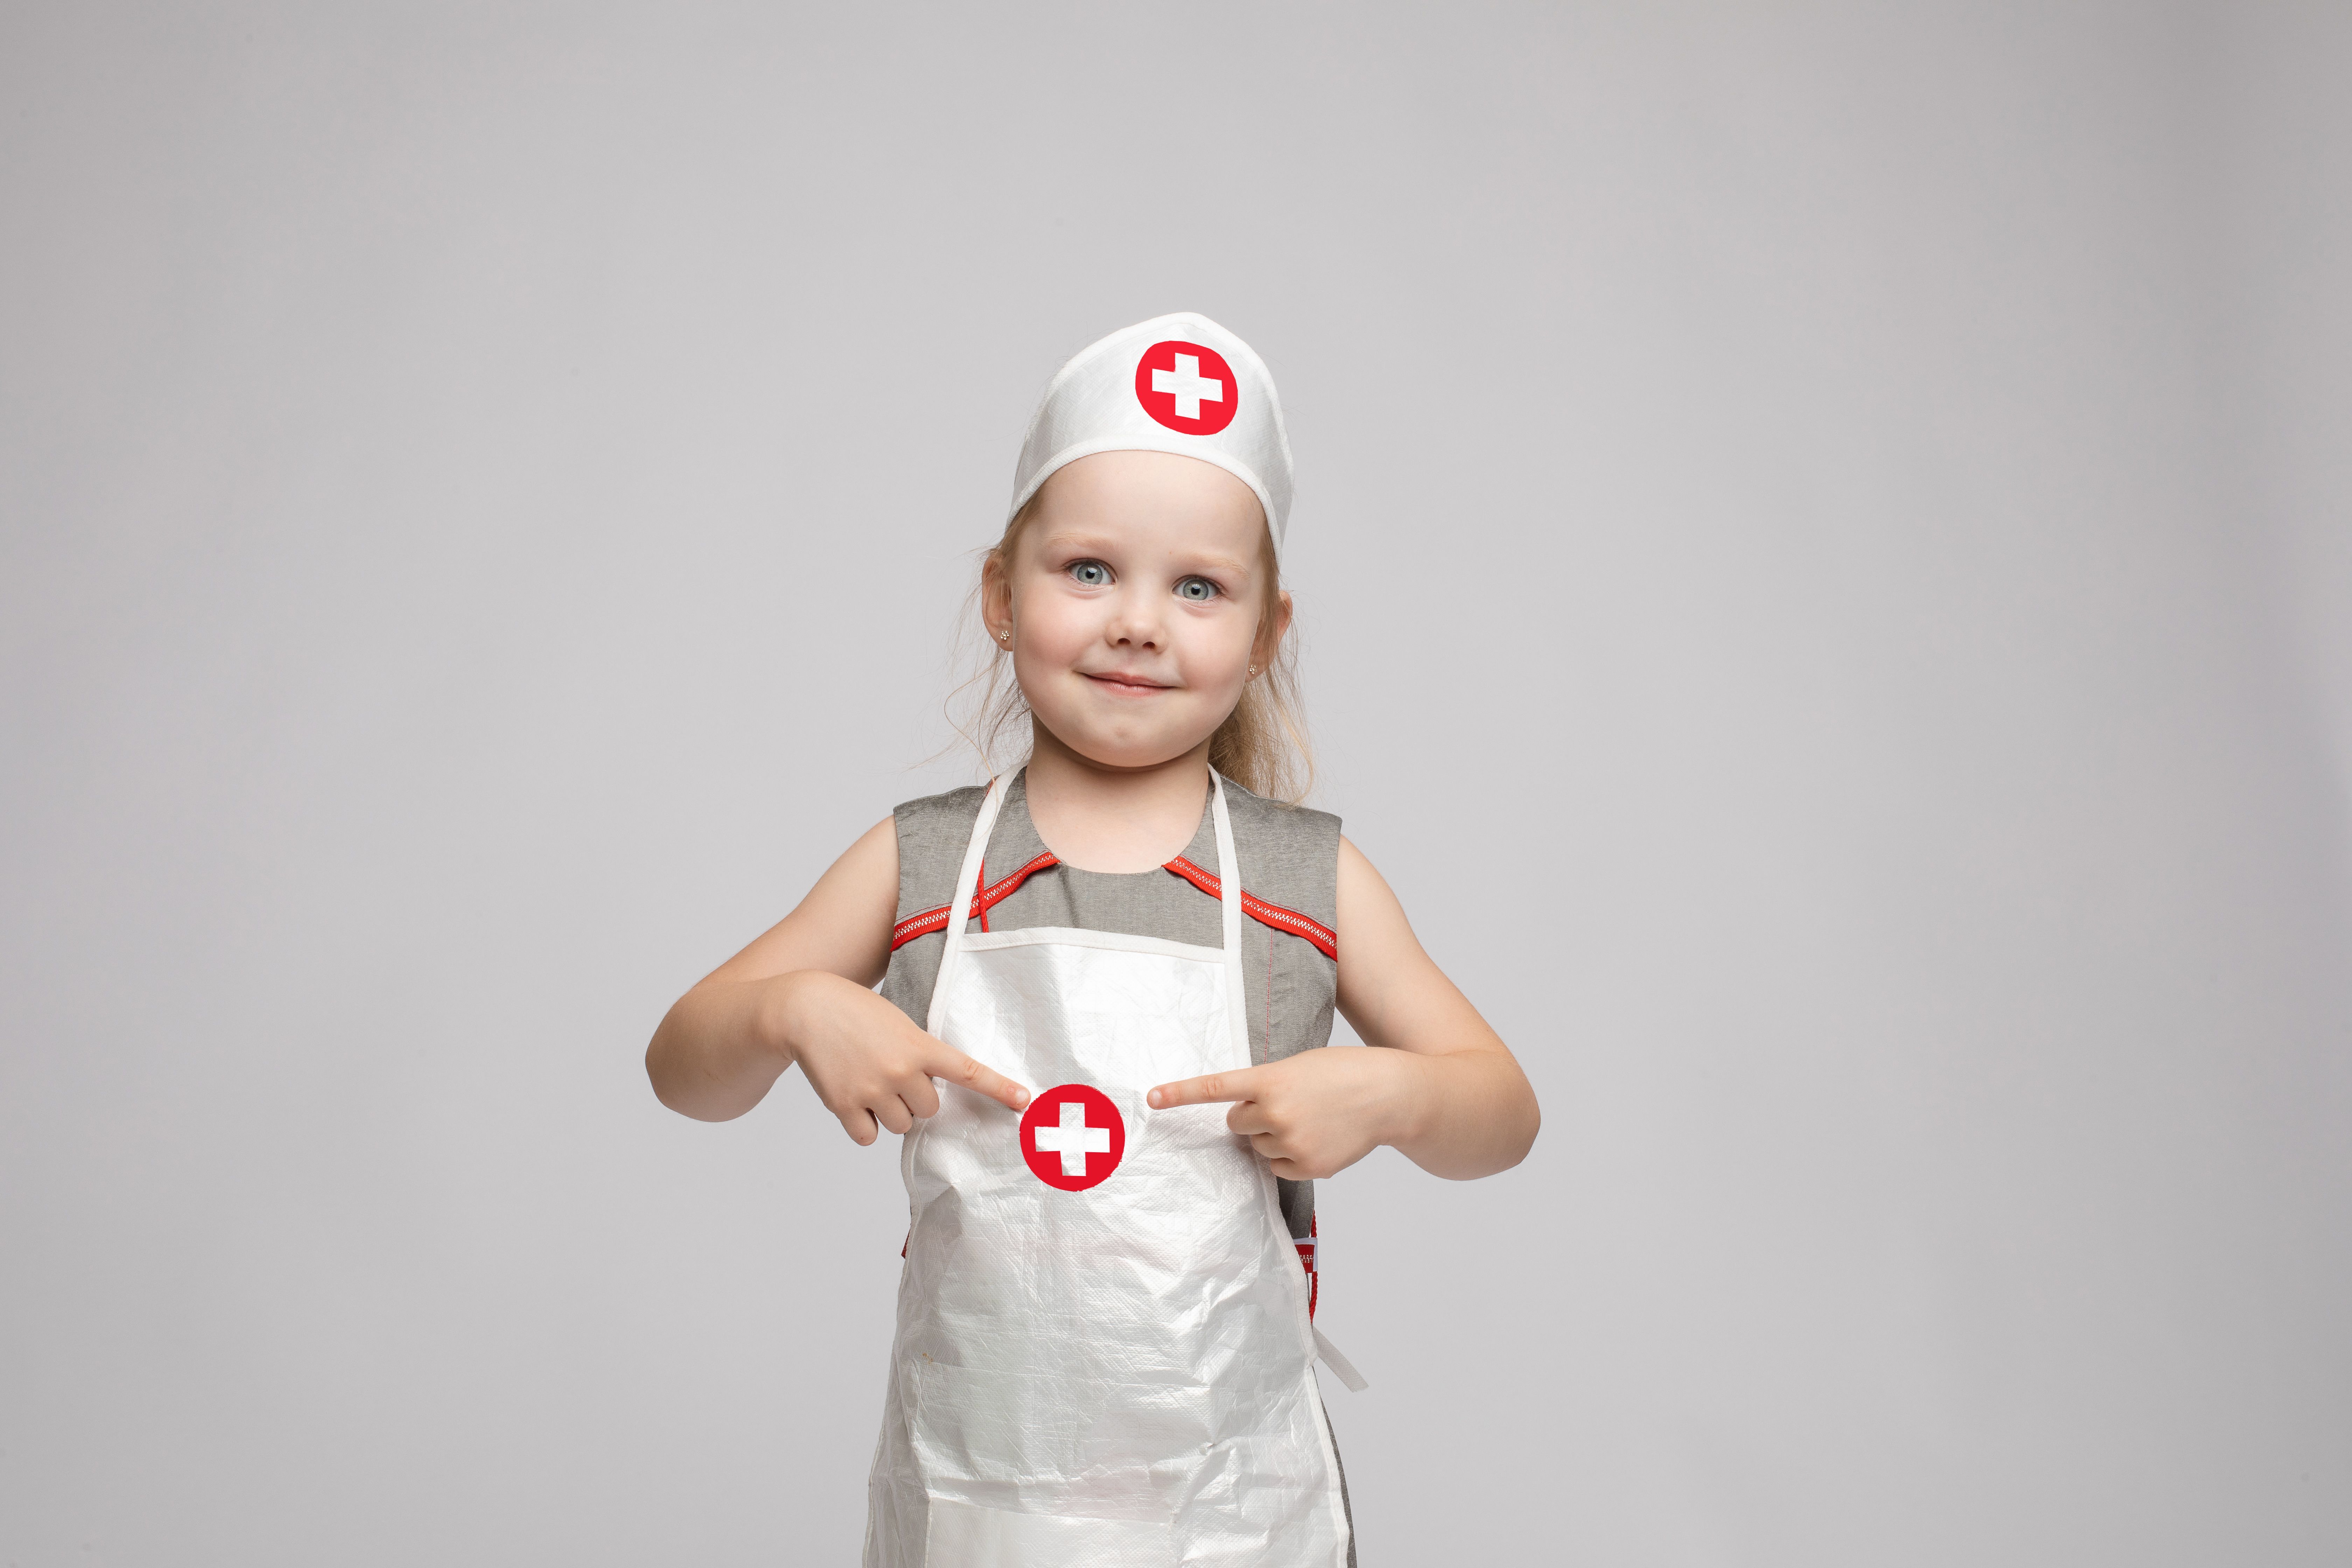 Little girl ready to help with a sudden cardiac arrest emergency